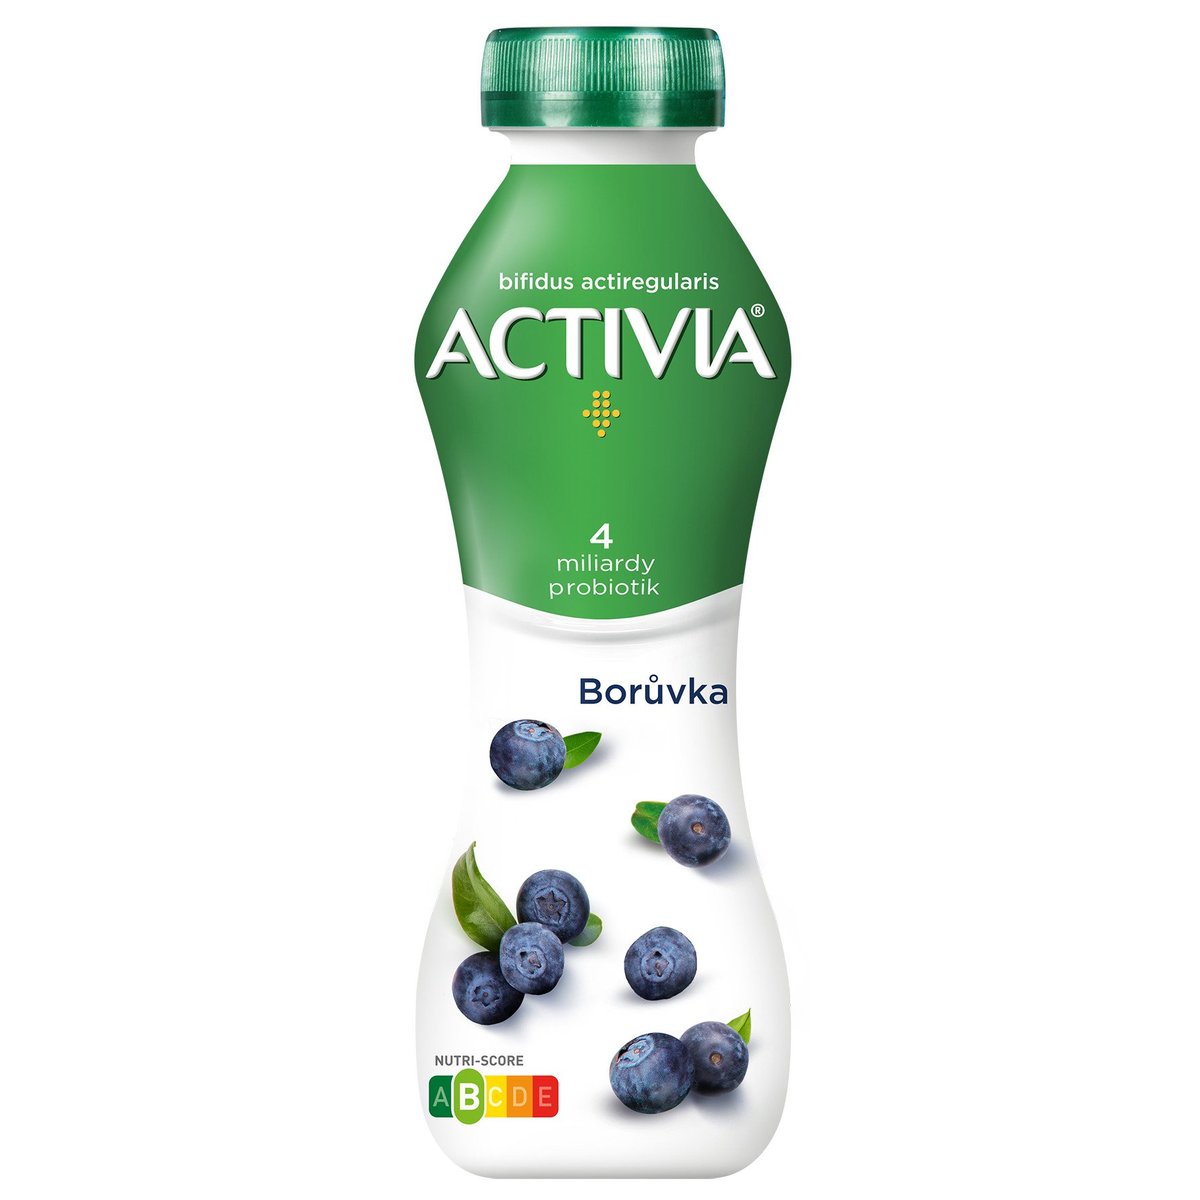 Activia Probiotický jogurtový nápoj borůvka v akci